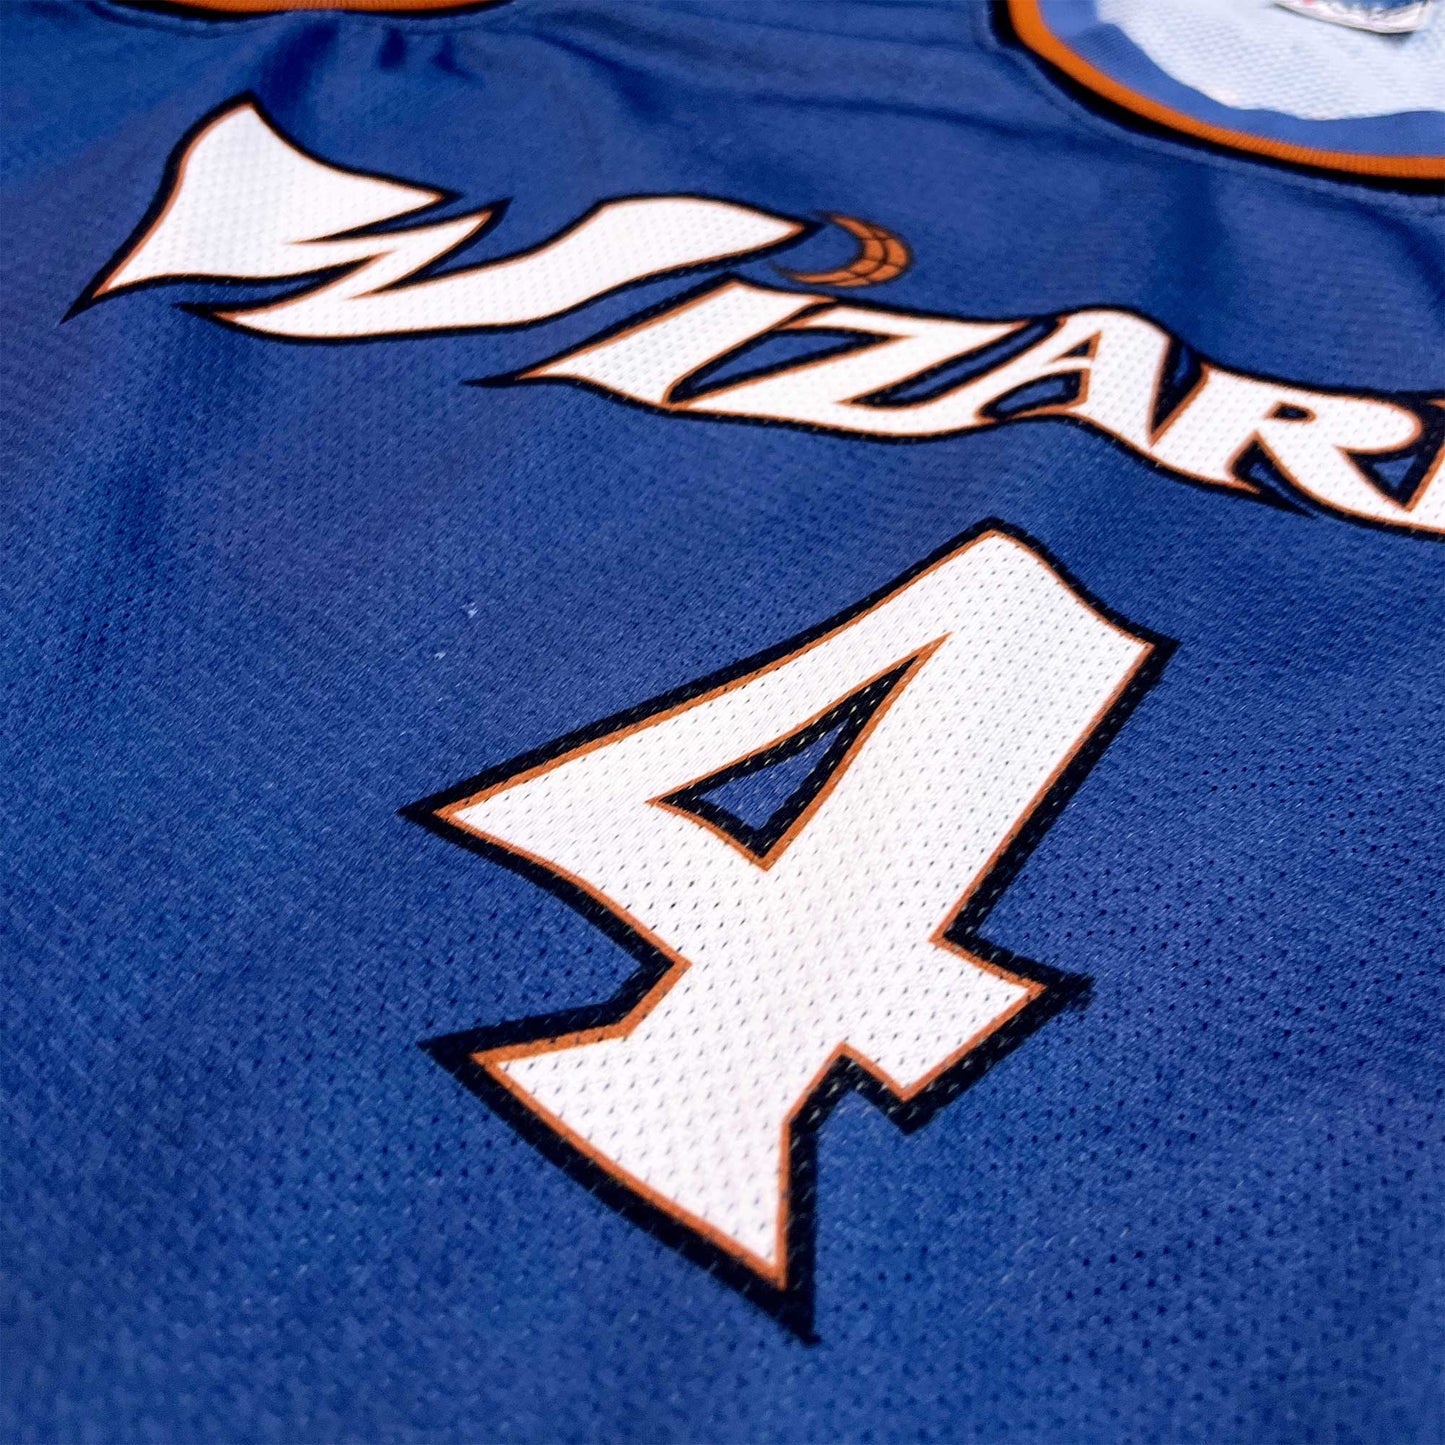 Washington Wizards - Chris Webber - Größe XL - Champion - NBA Trikot